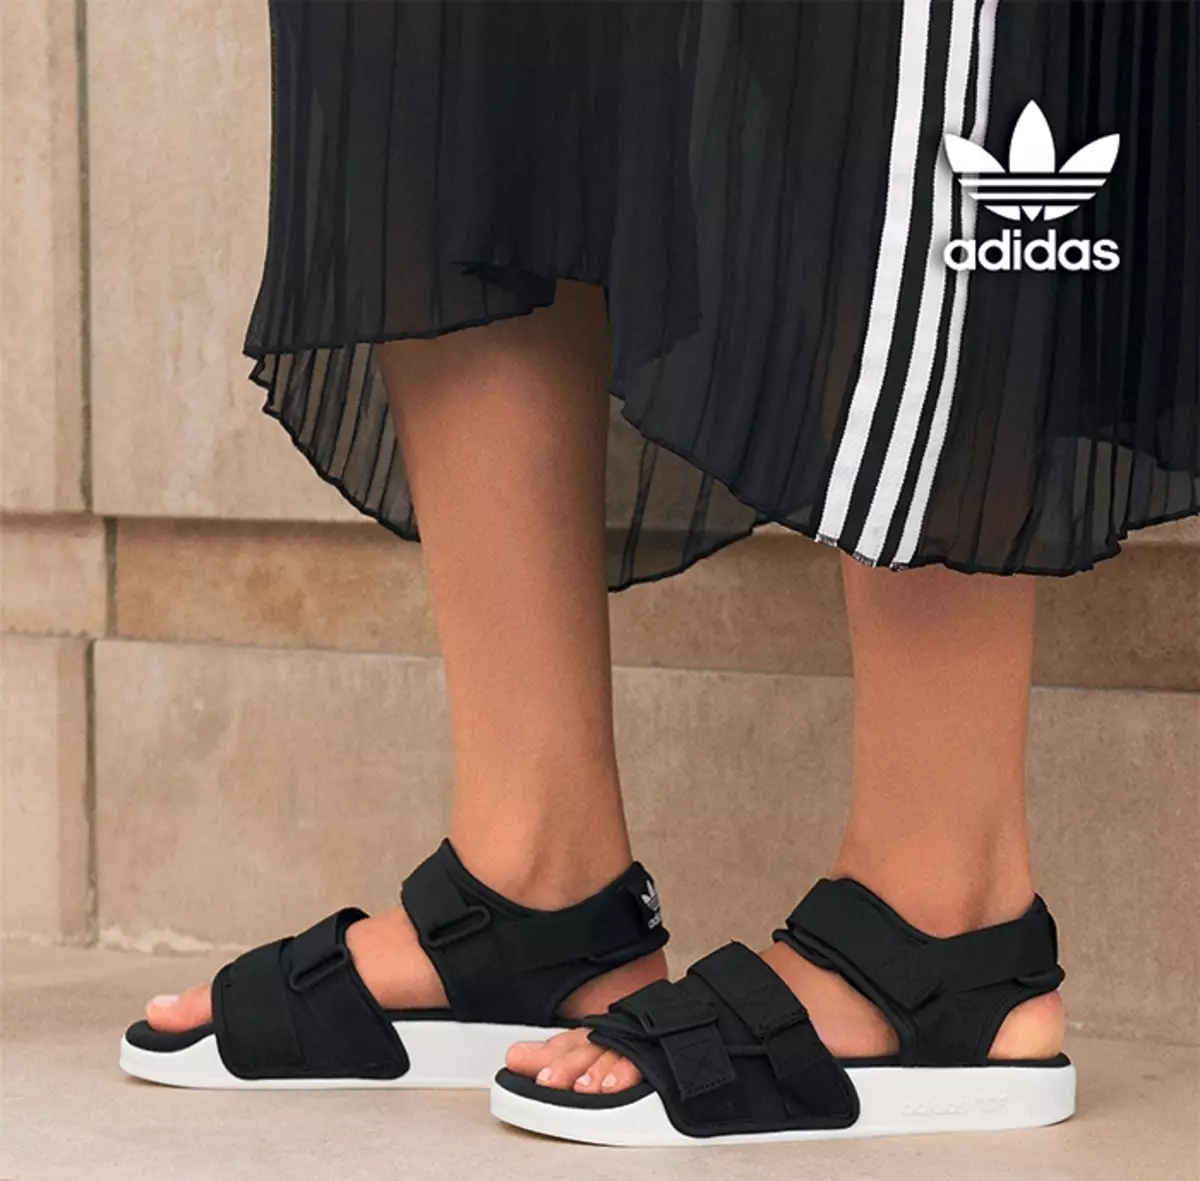 Adidas Sandals (25 ပုံရိပ် 25 ပုံ) - အမျိုးသမီးအားကစားမော်ဒယ်များ, Cyprox Ultra Sandal Line 14997_3